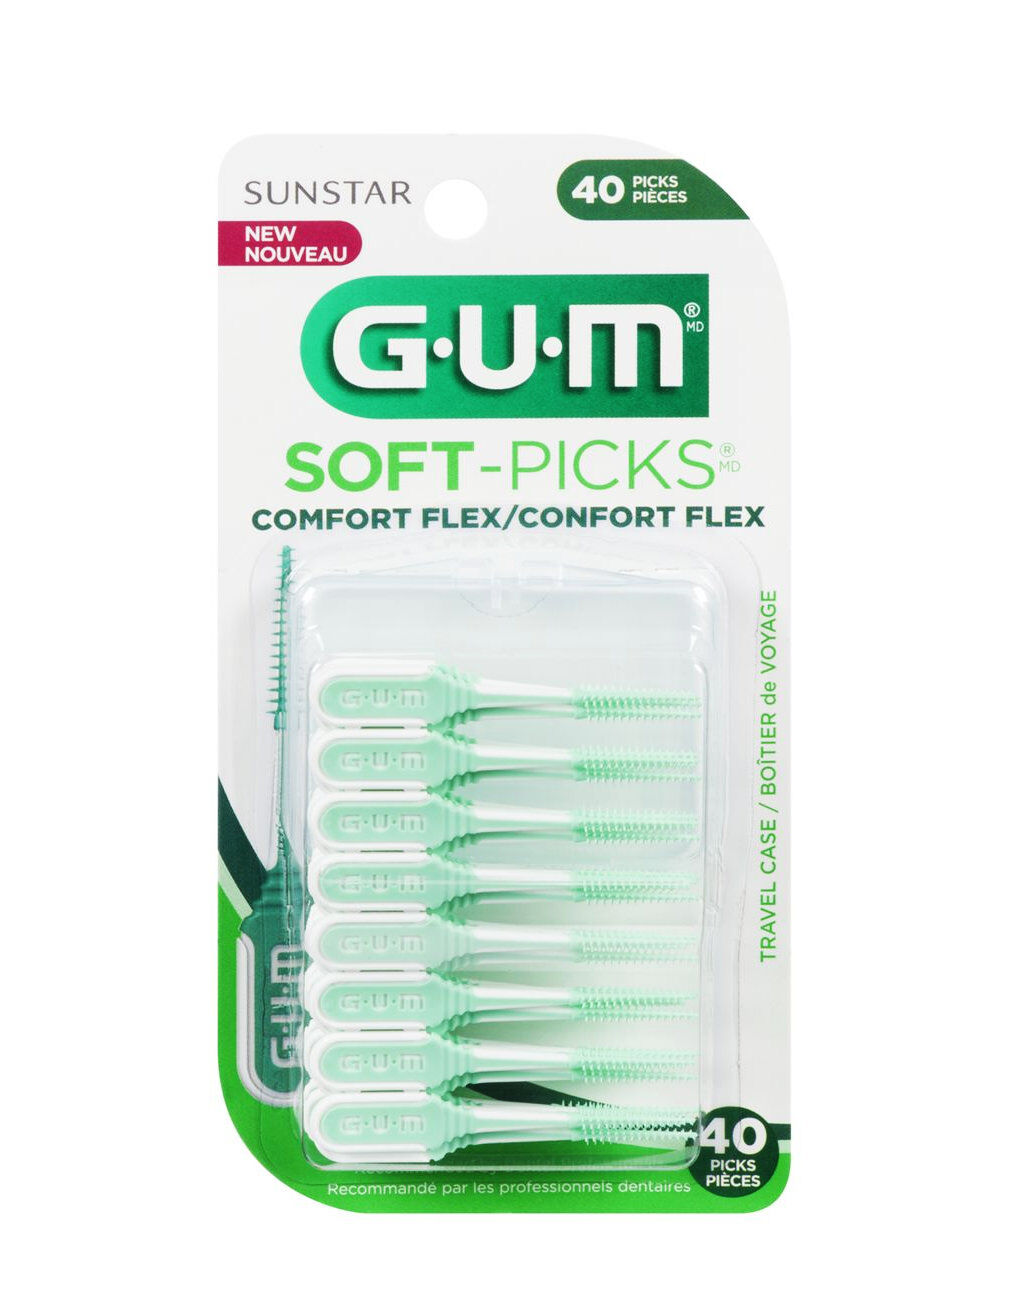 GUM Soft-Picks Comfort Flex 40 Soft-Picks Large